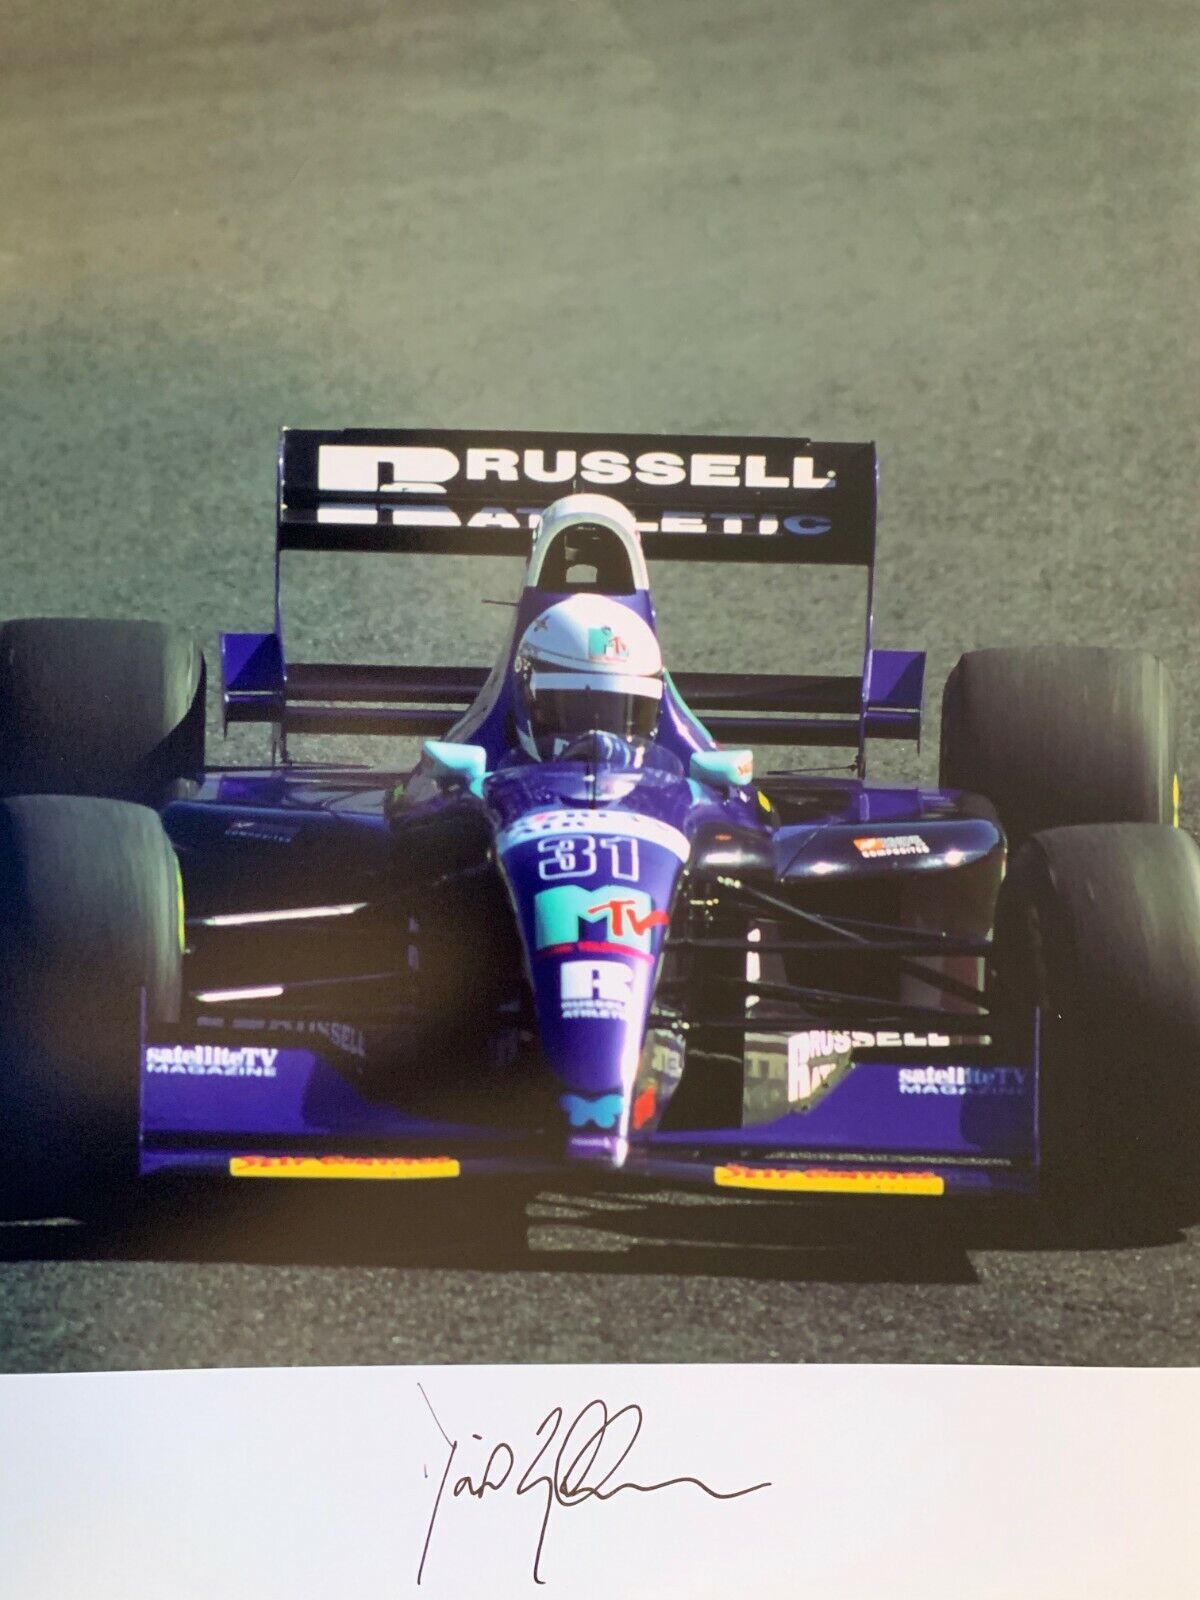 David Brabham Hand Signed 18x12 Photo Poster painting - Formula 1 Autograph - F1 4.